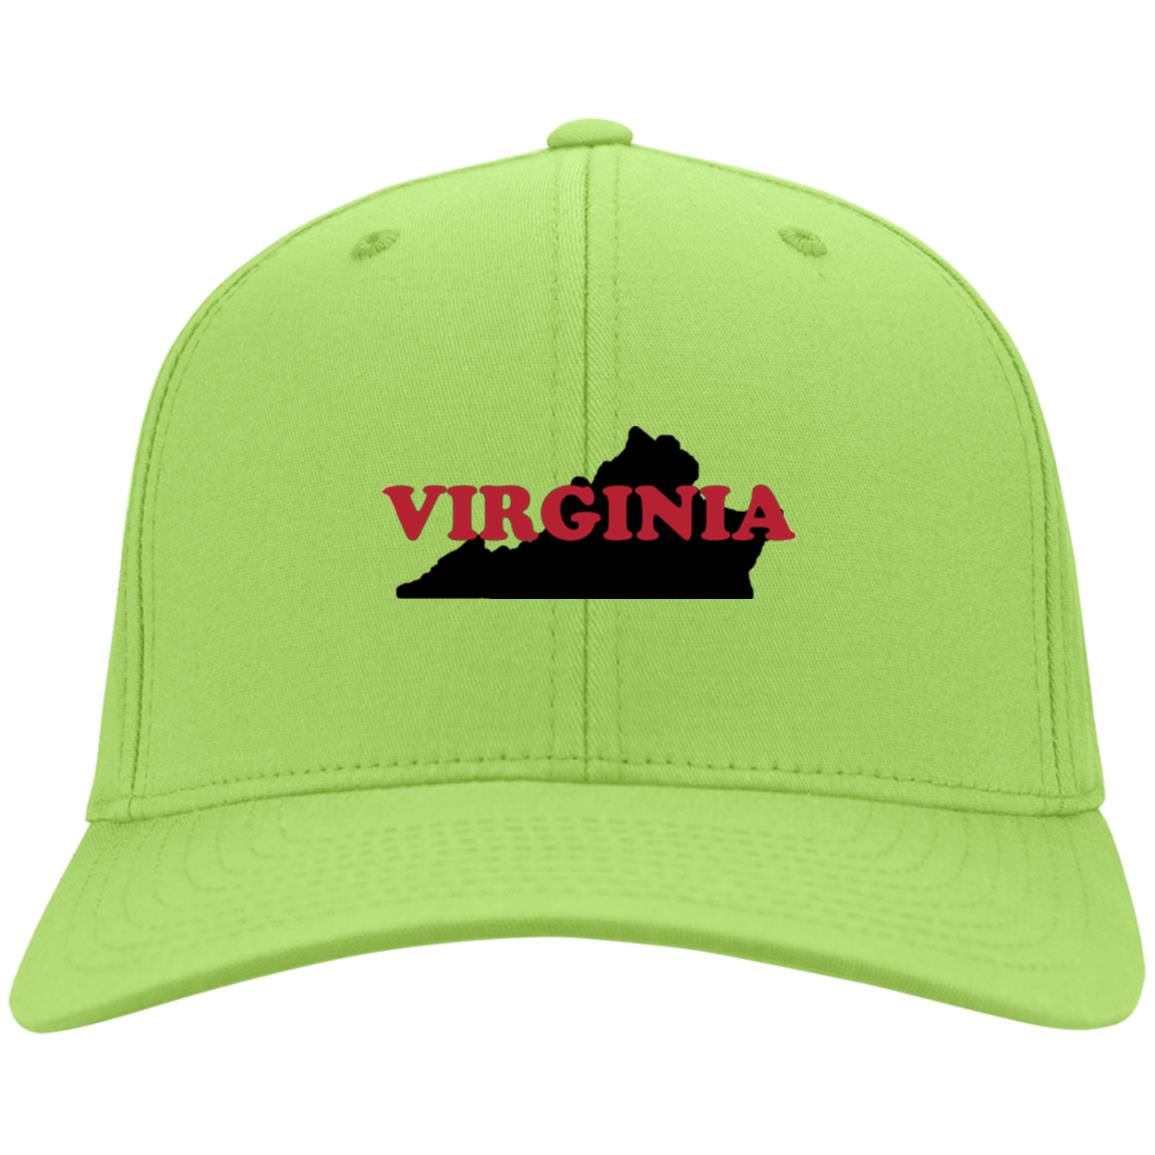 Virginia State Hat